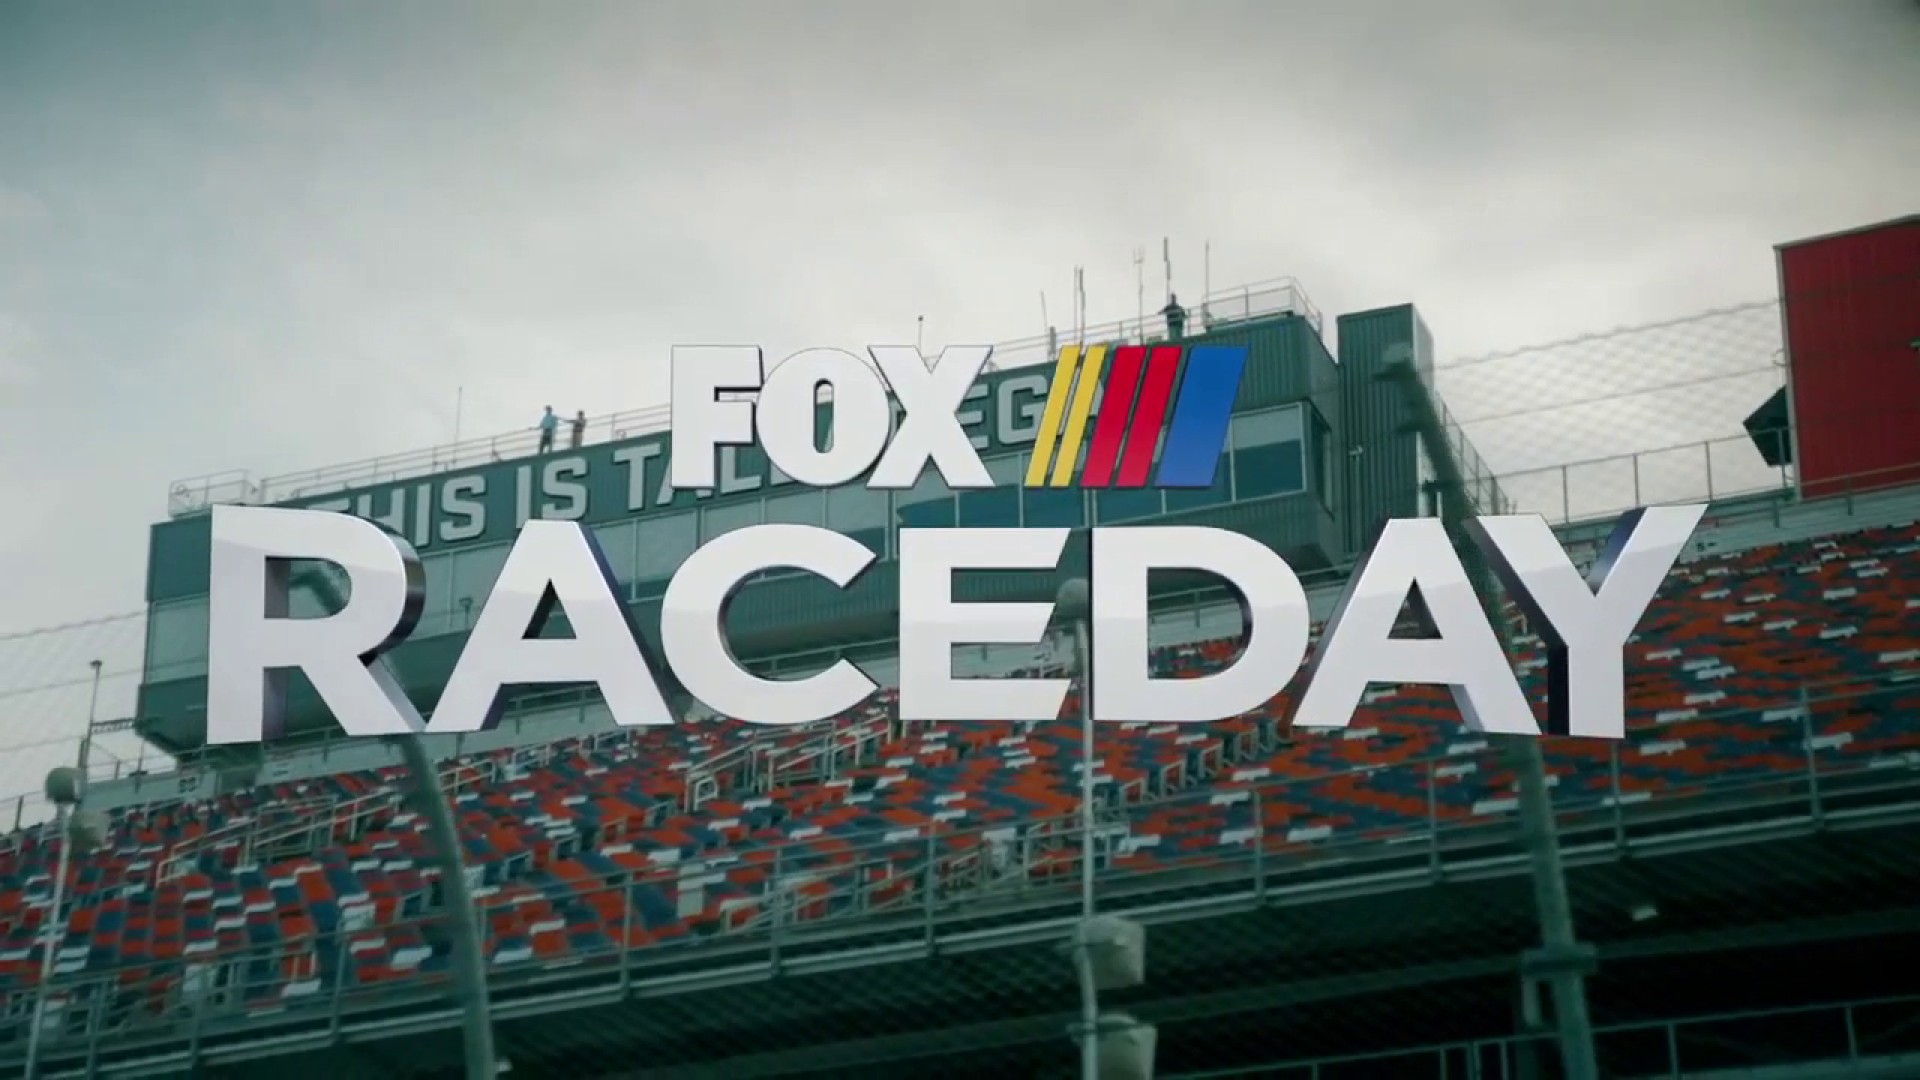 FOX NASCAR on X